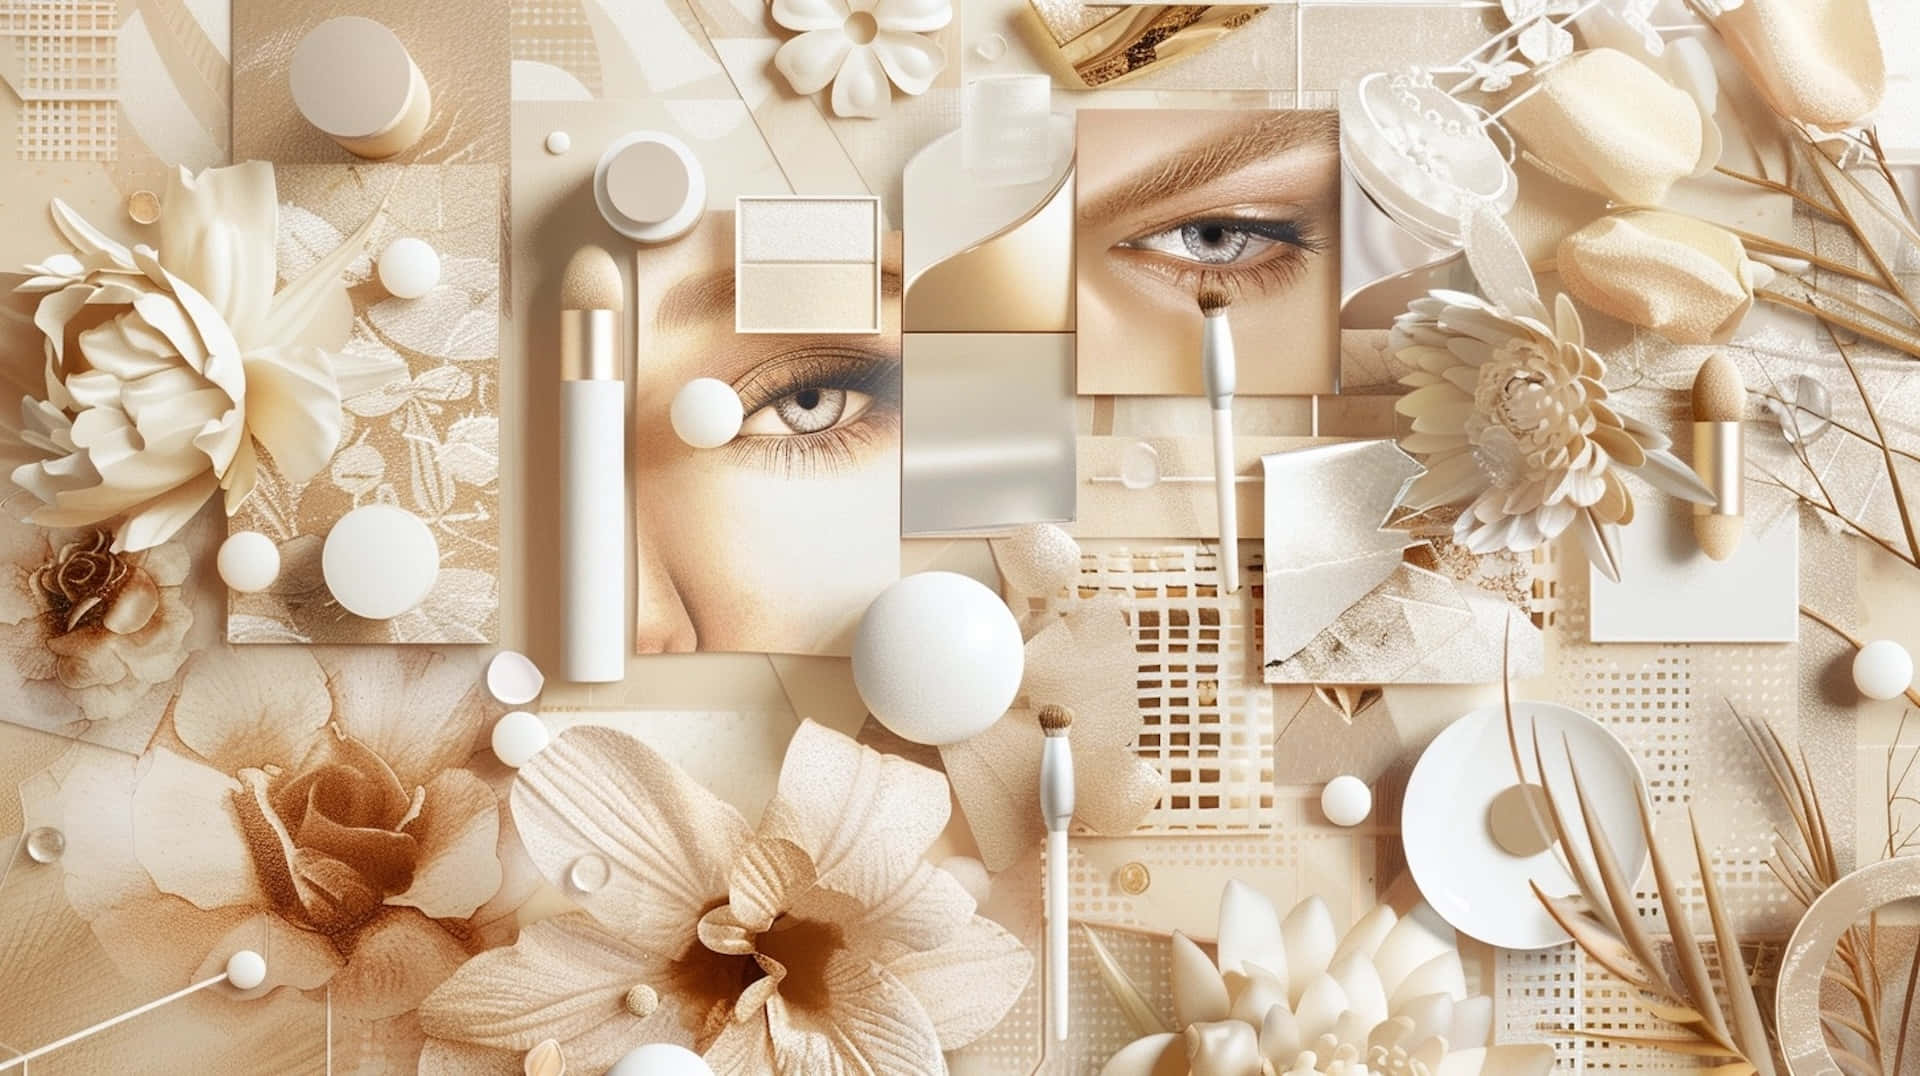 Clean Beauty Aesthetic Collage.jpg Wallpaper